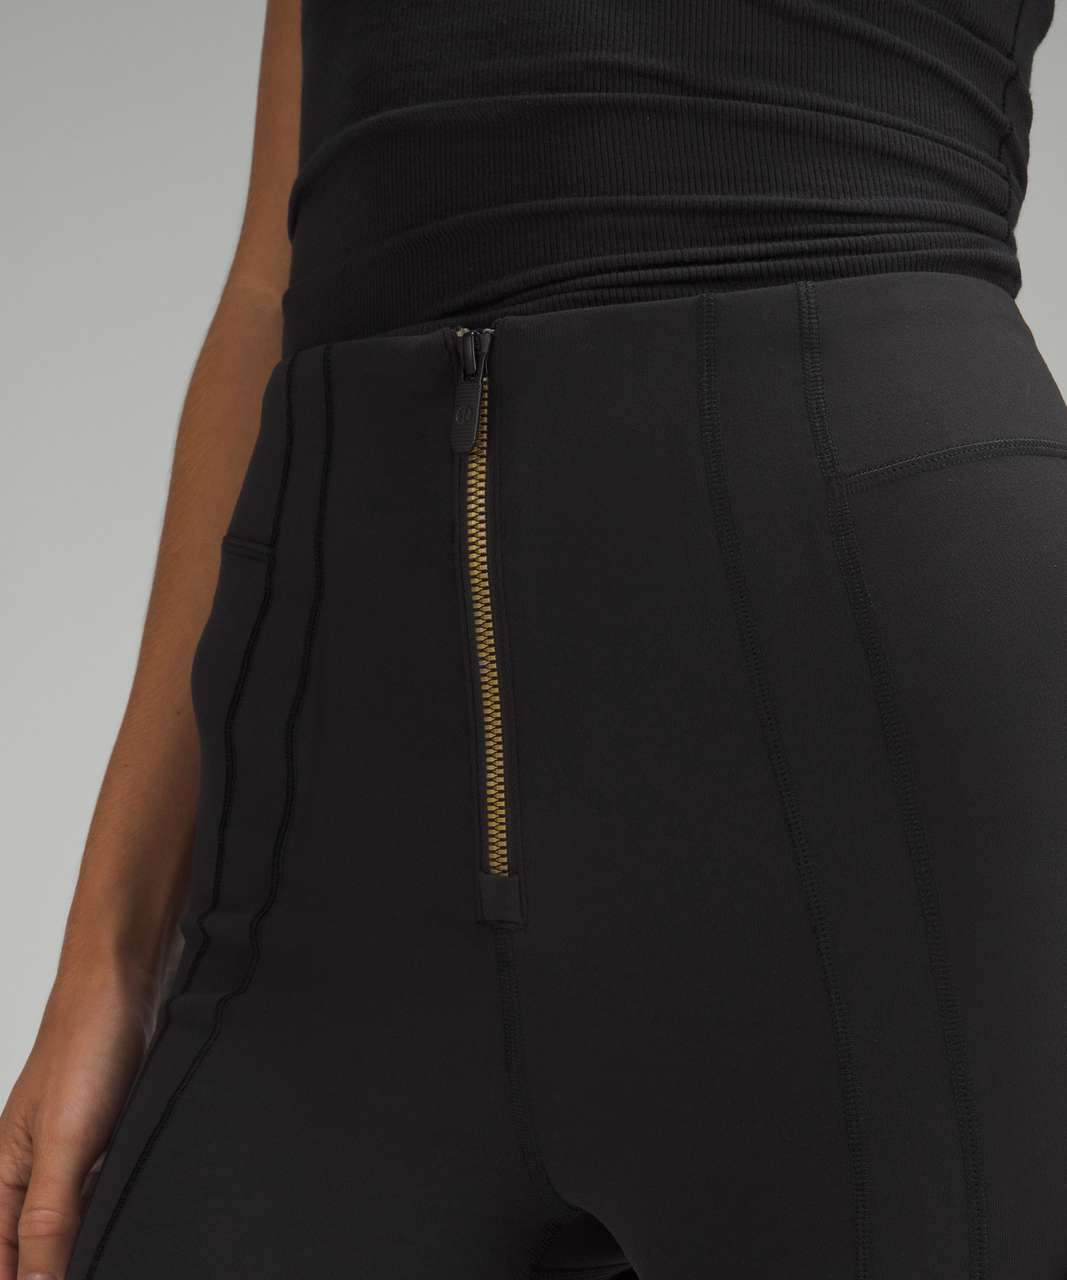 Lululemon Define Zip-Front High-Rise Flared Pant - Black